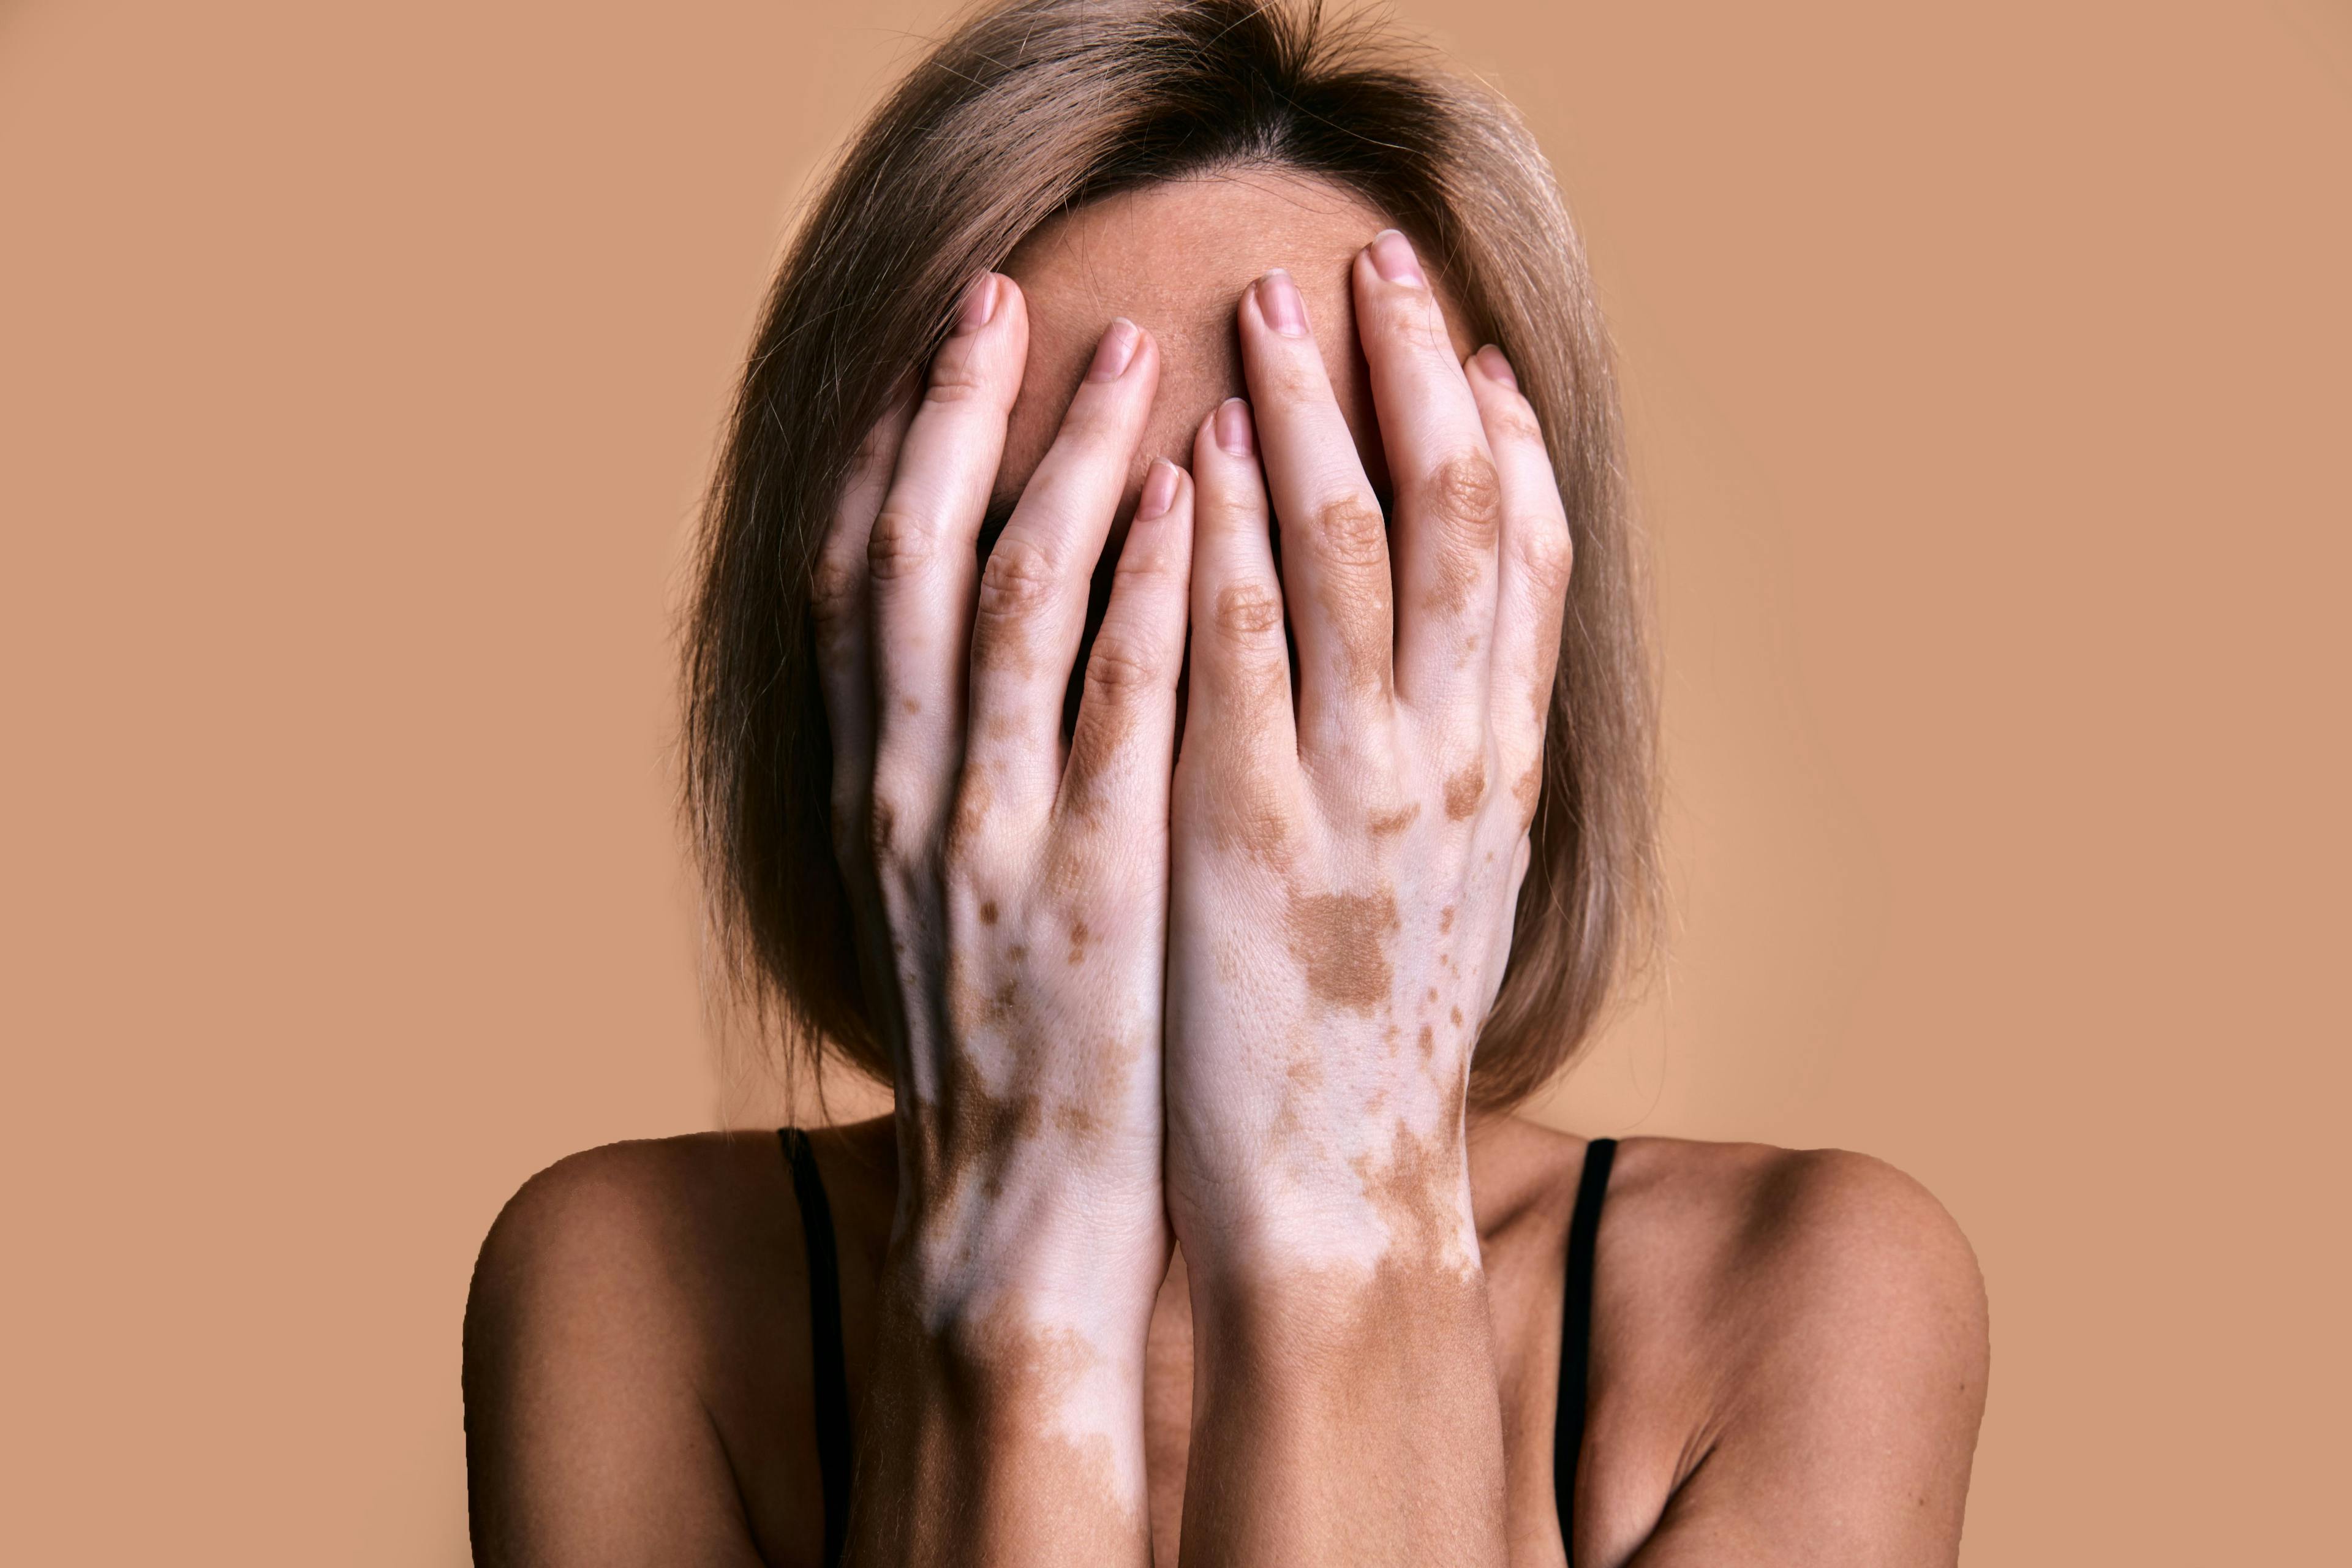 Treatment of Vitiligo with Phototherapy